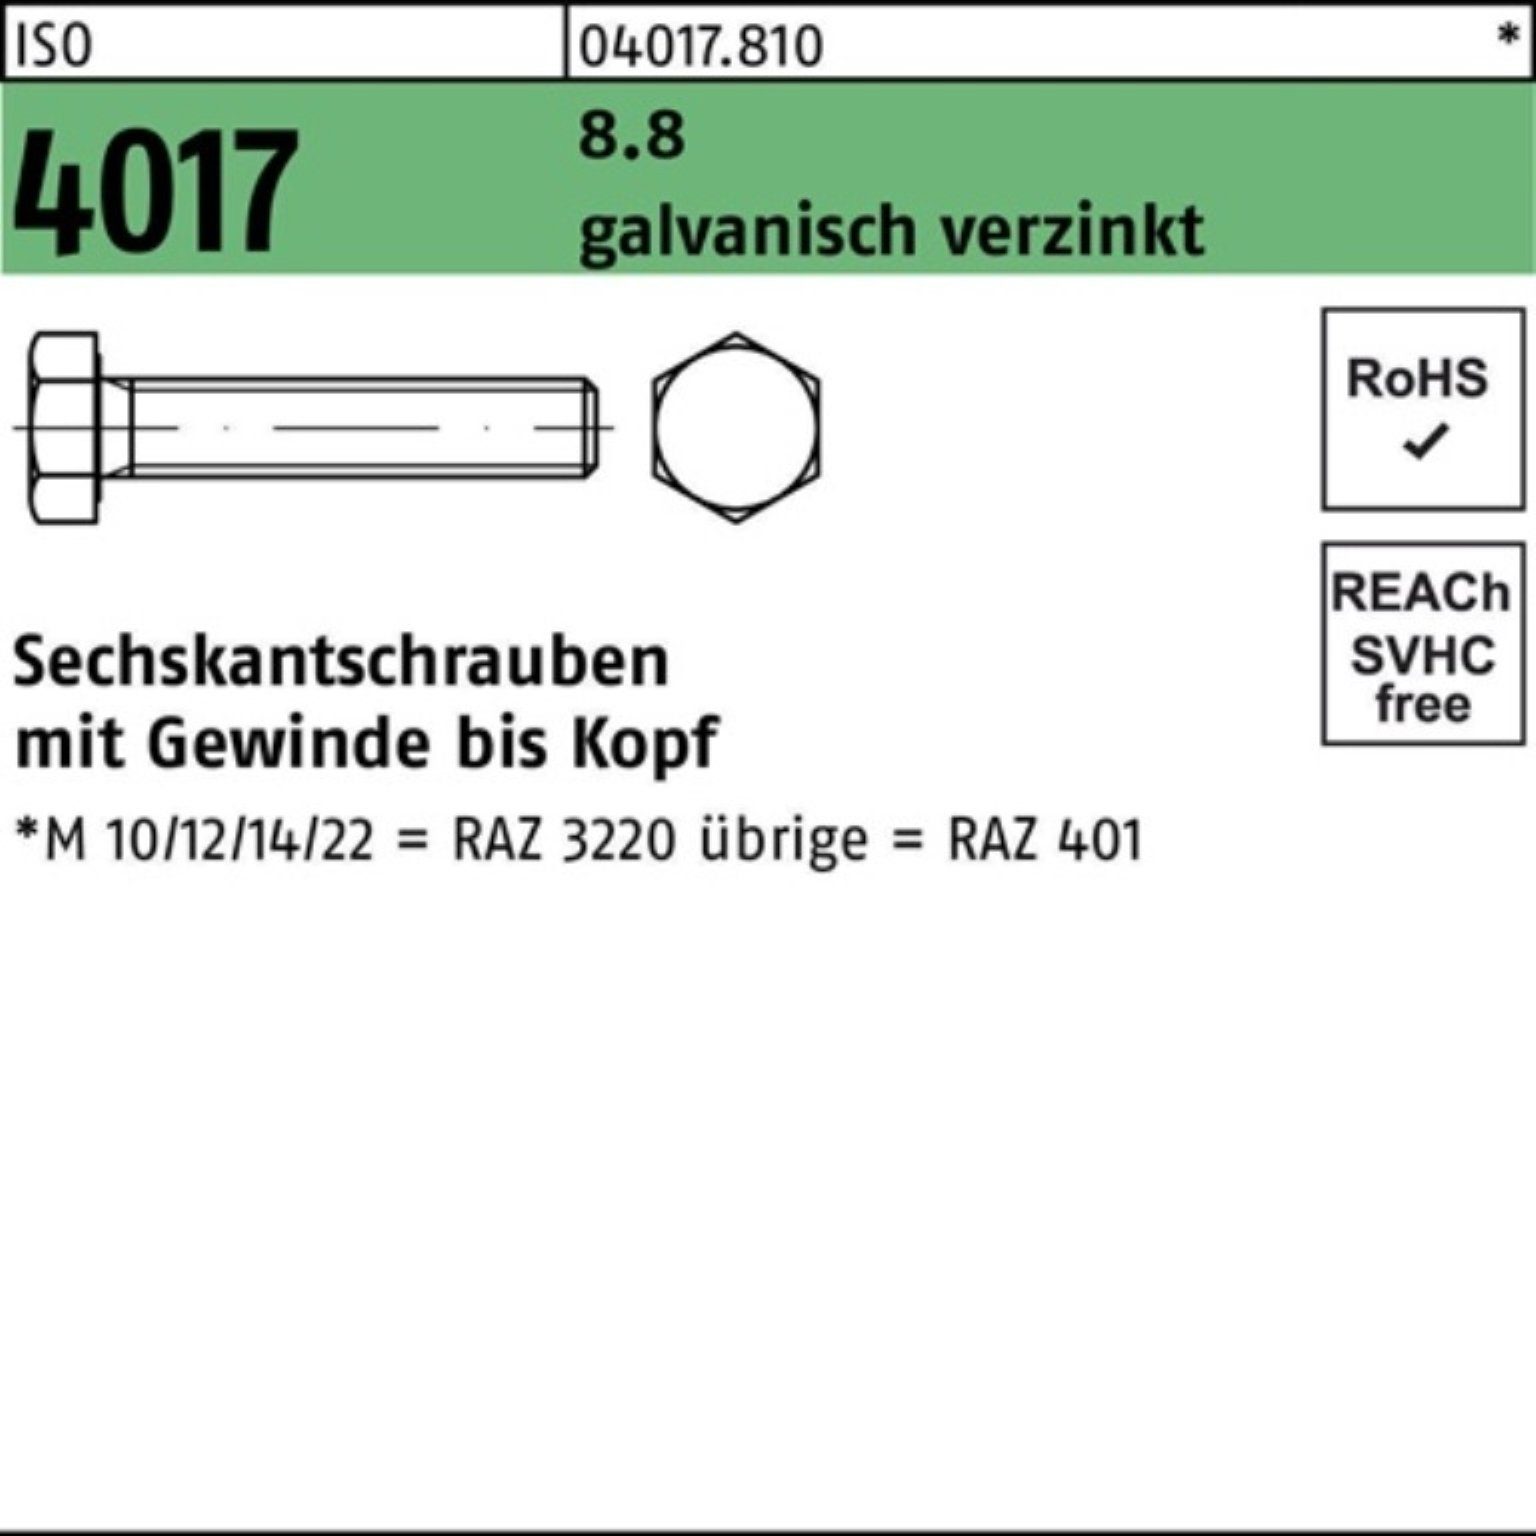 Bufab Sechskantschraube 240 galv.verz. 8.8 ISO 4017 M24x 1 Pack Sechskantschraube VG St 100er